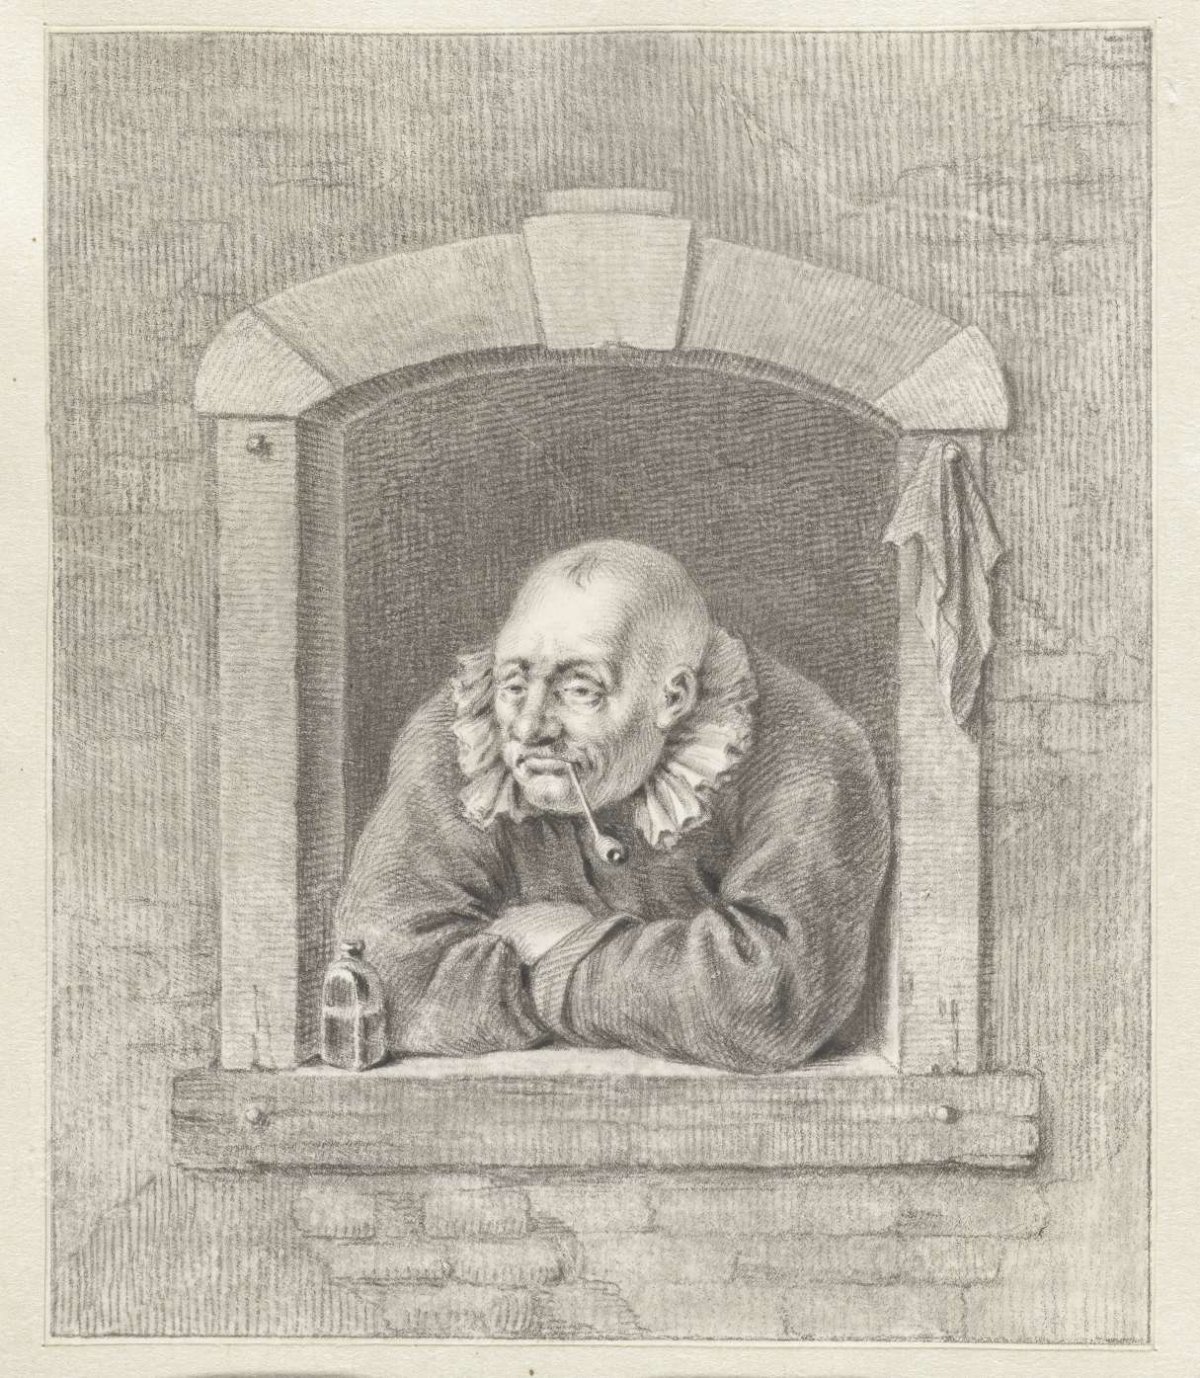 Rokende man in venster, Abraham Delfos, 1741 - 1820